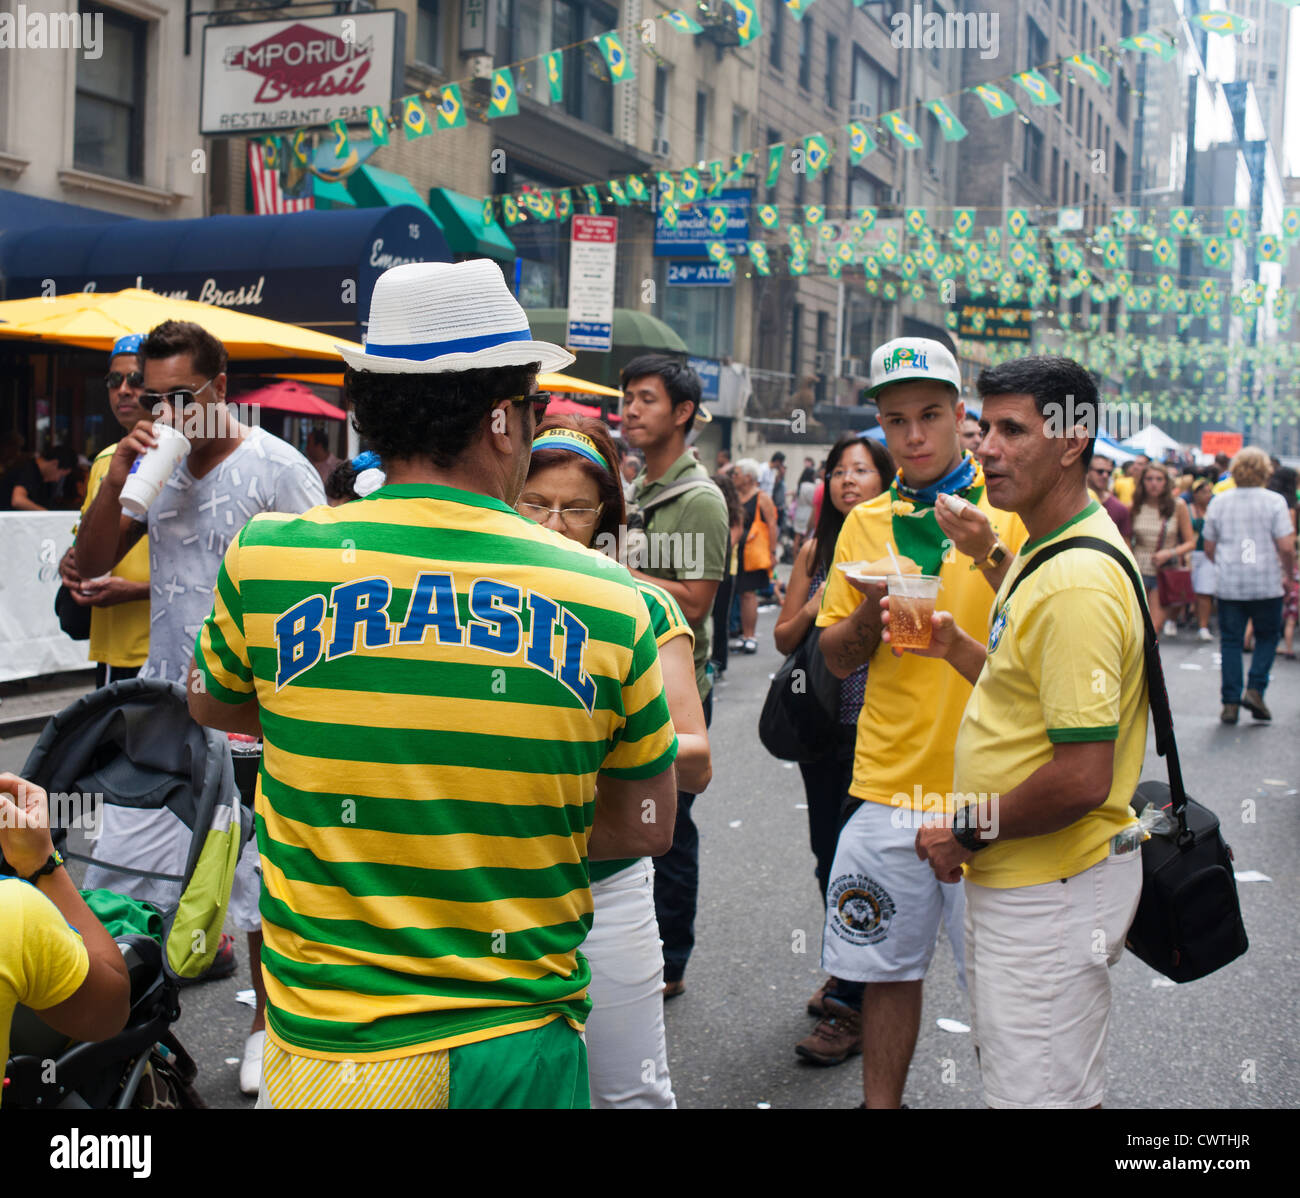 Brazilians and visitors celebrate at the 28th Annual Brazil Day